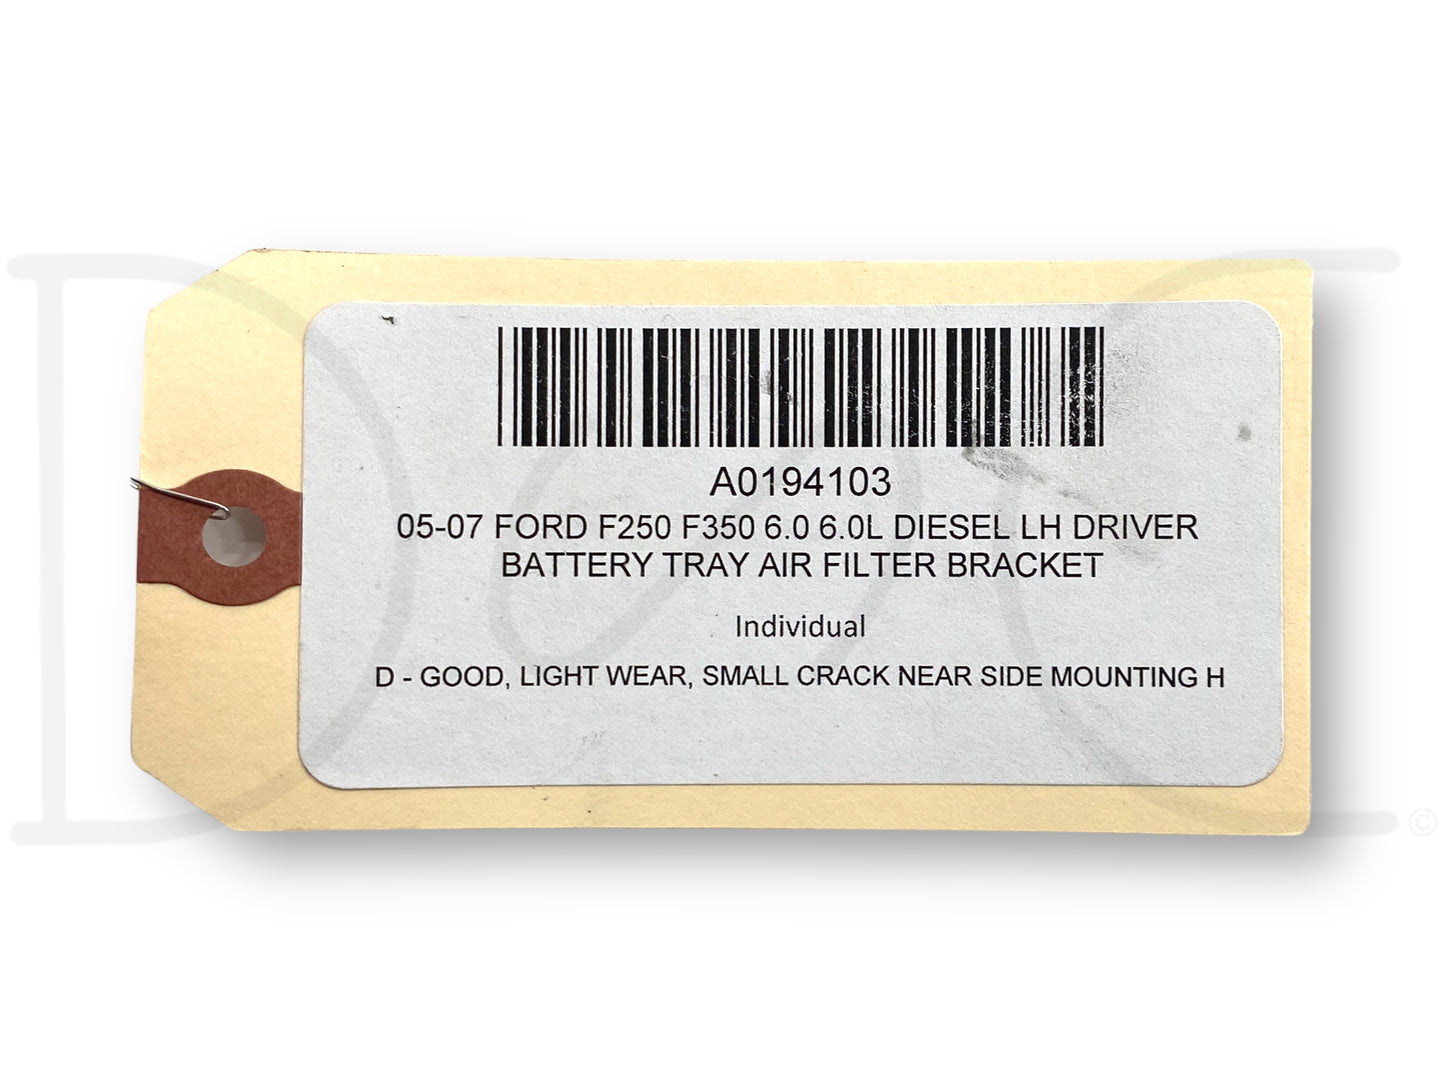 05-07 Ford F250 F350 6.0 6.0L Diesel LH Driver Battery Tray Air Filter Bracket